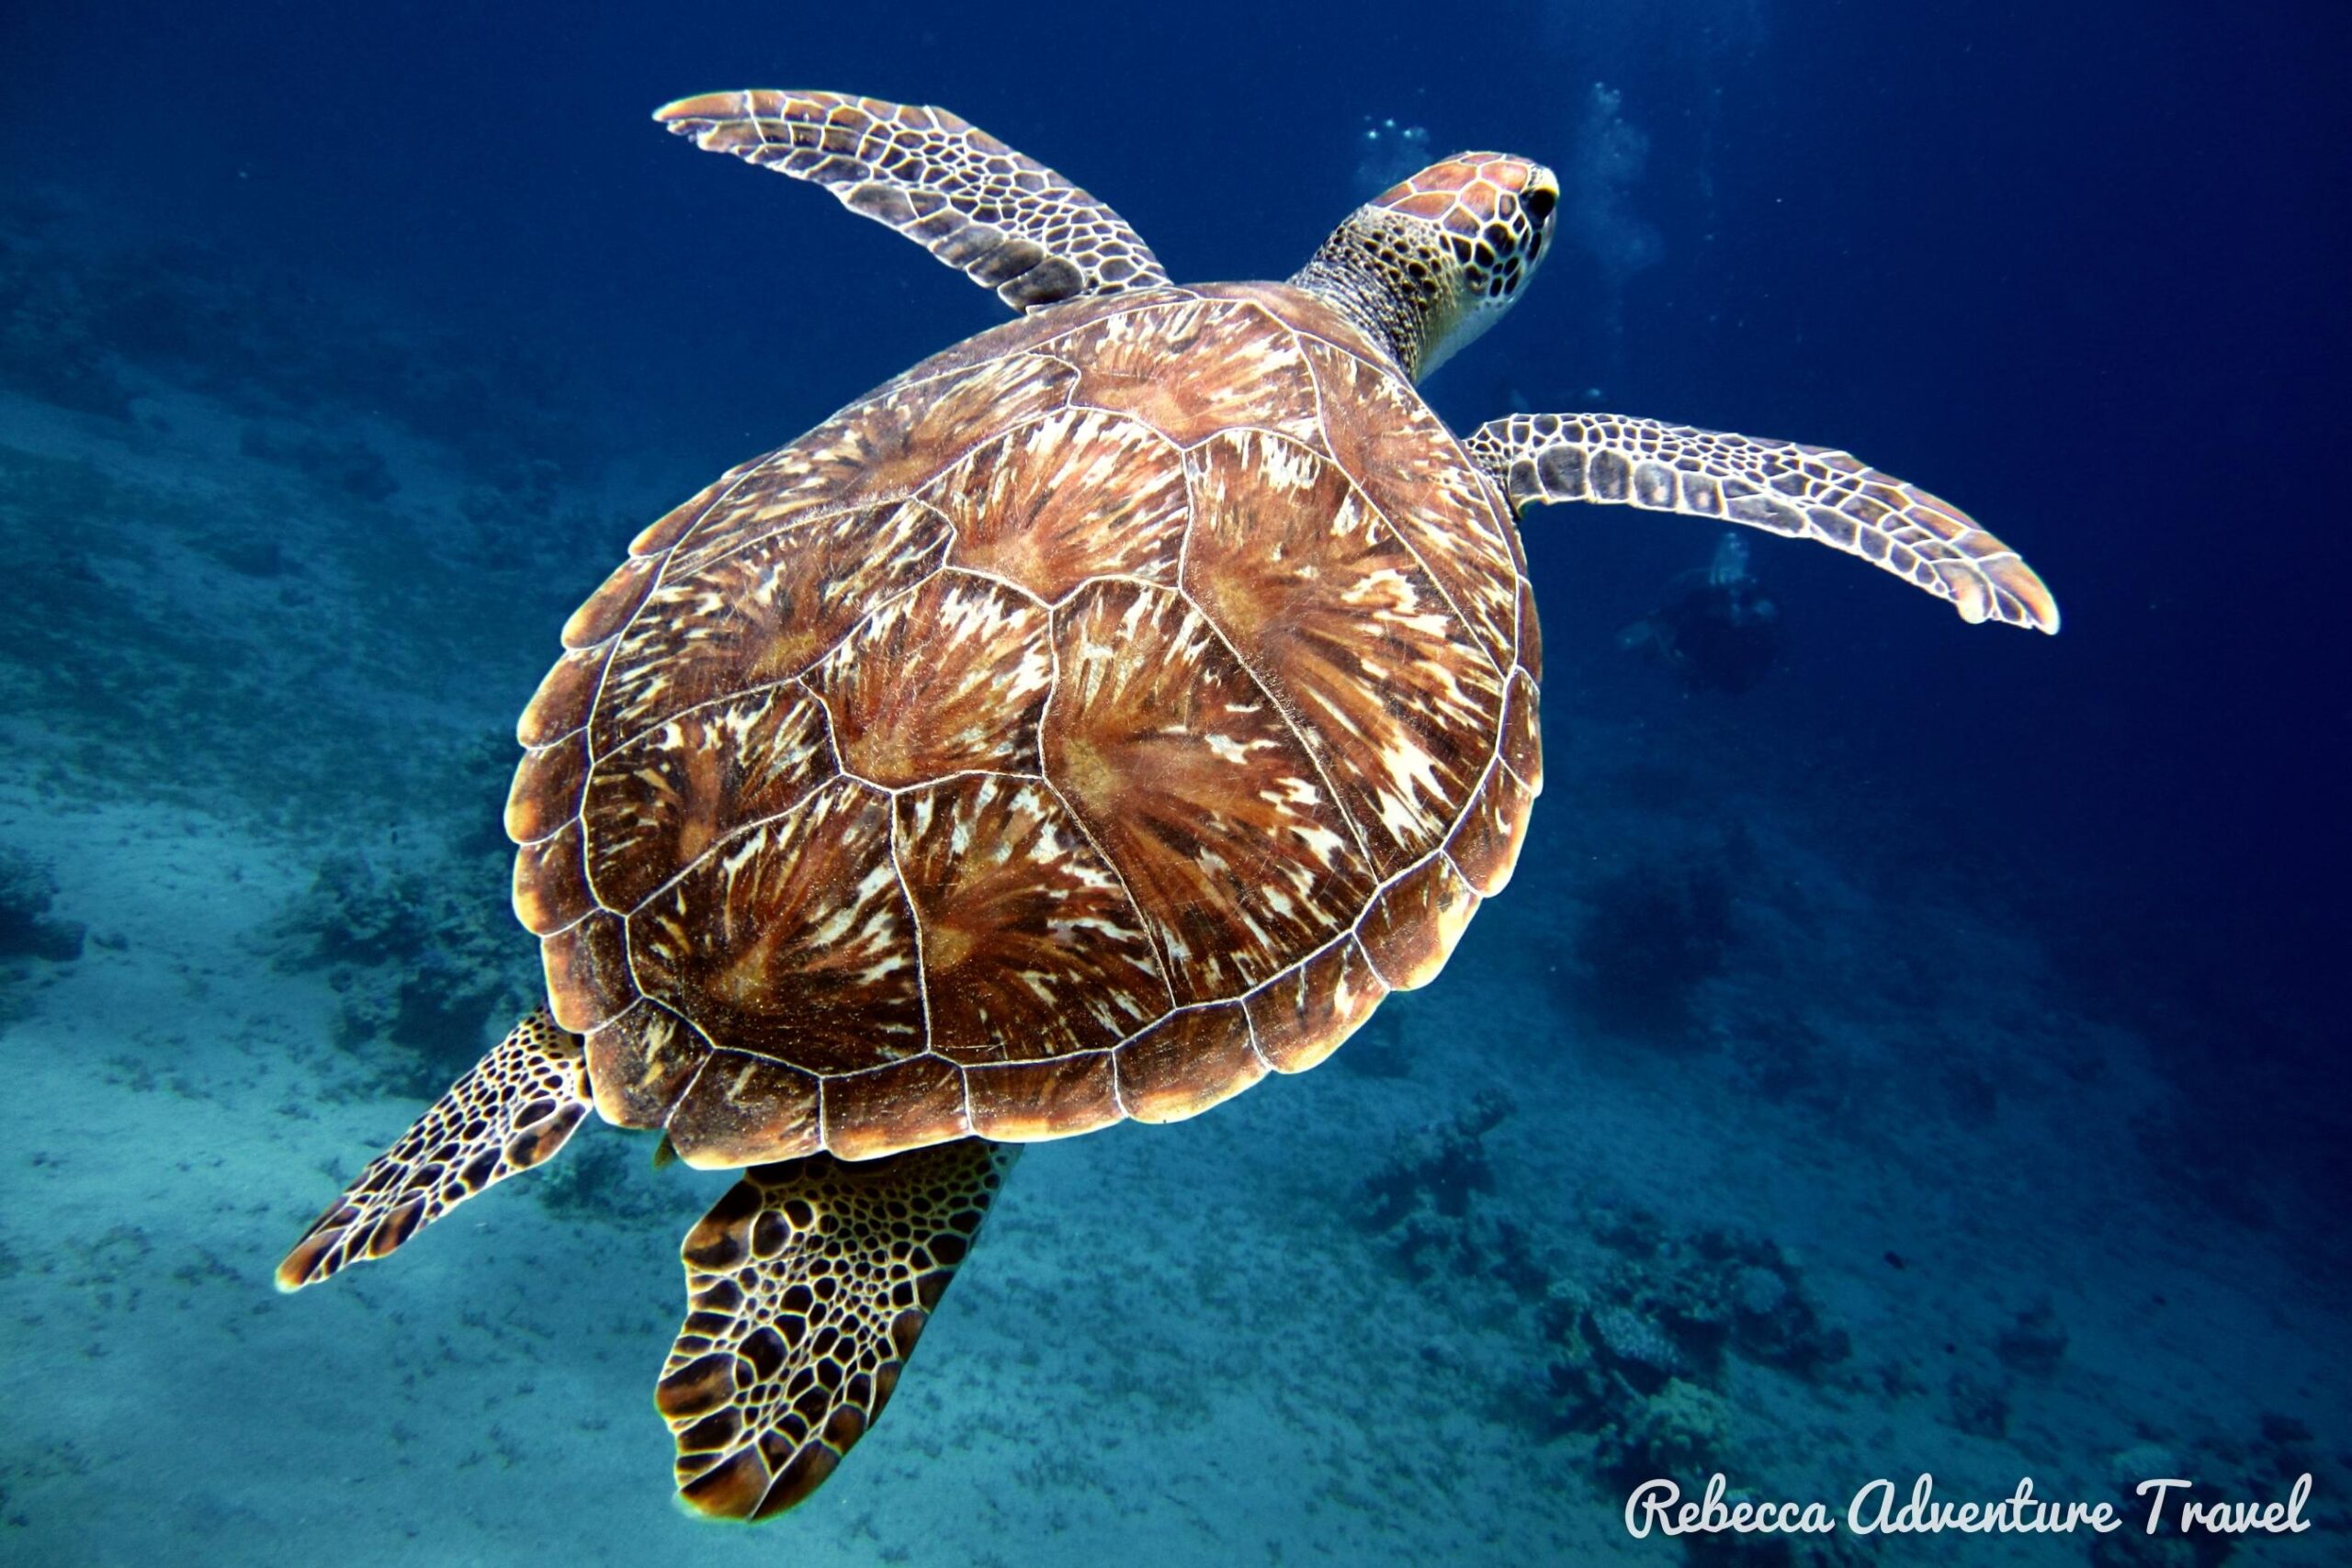 Galapagos Marine Reserve tortoise